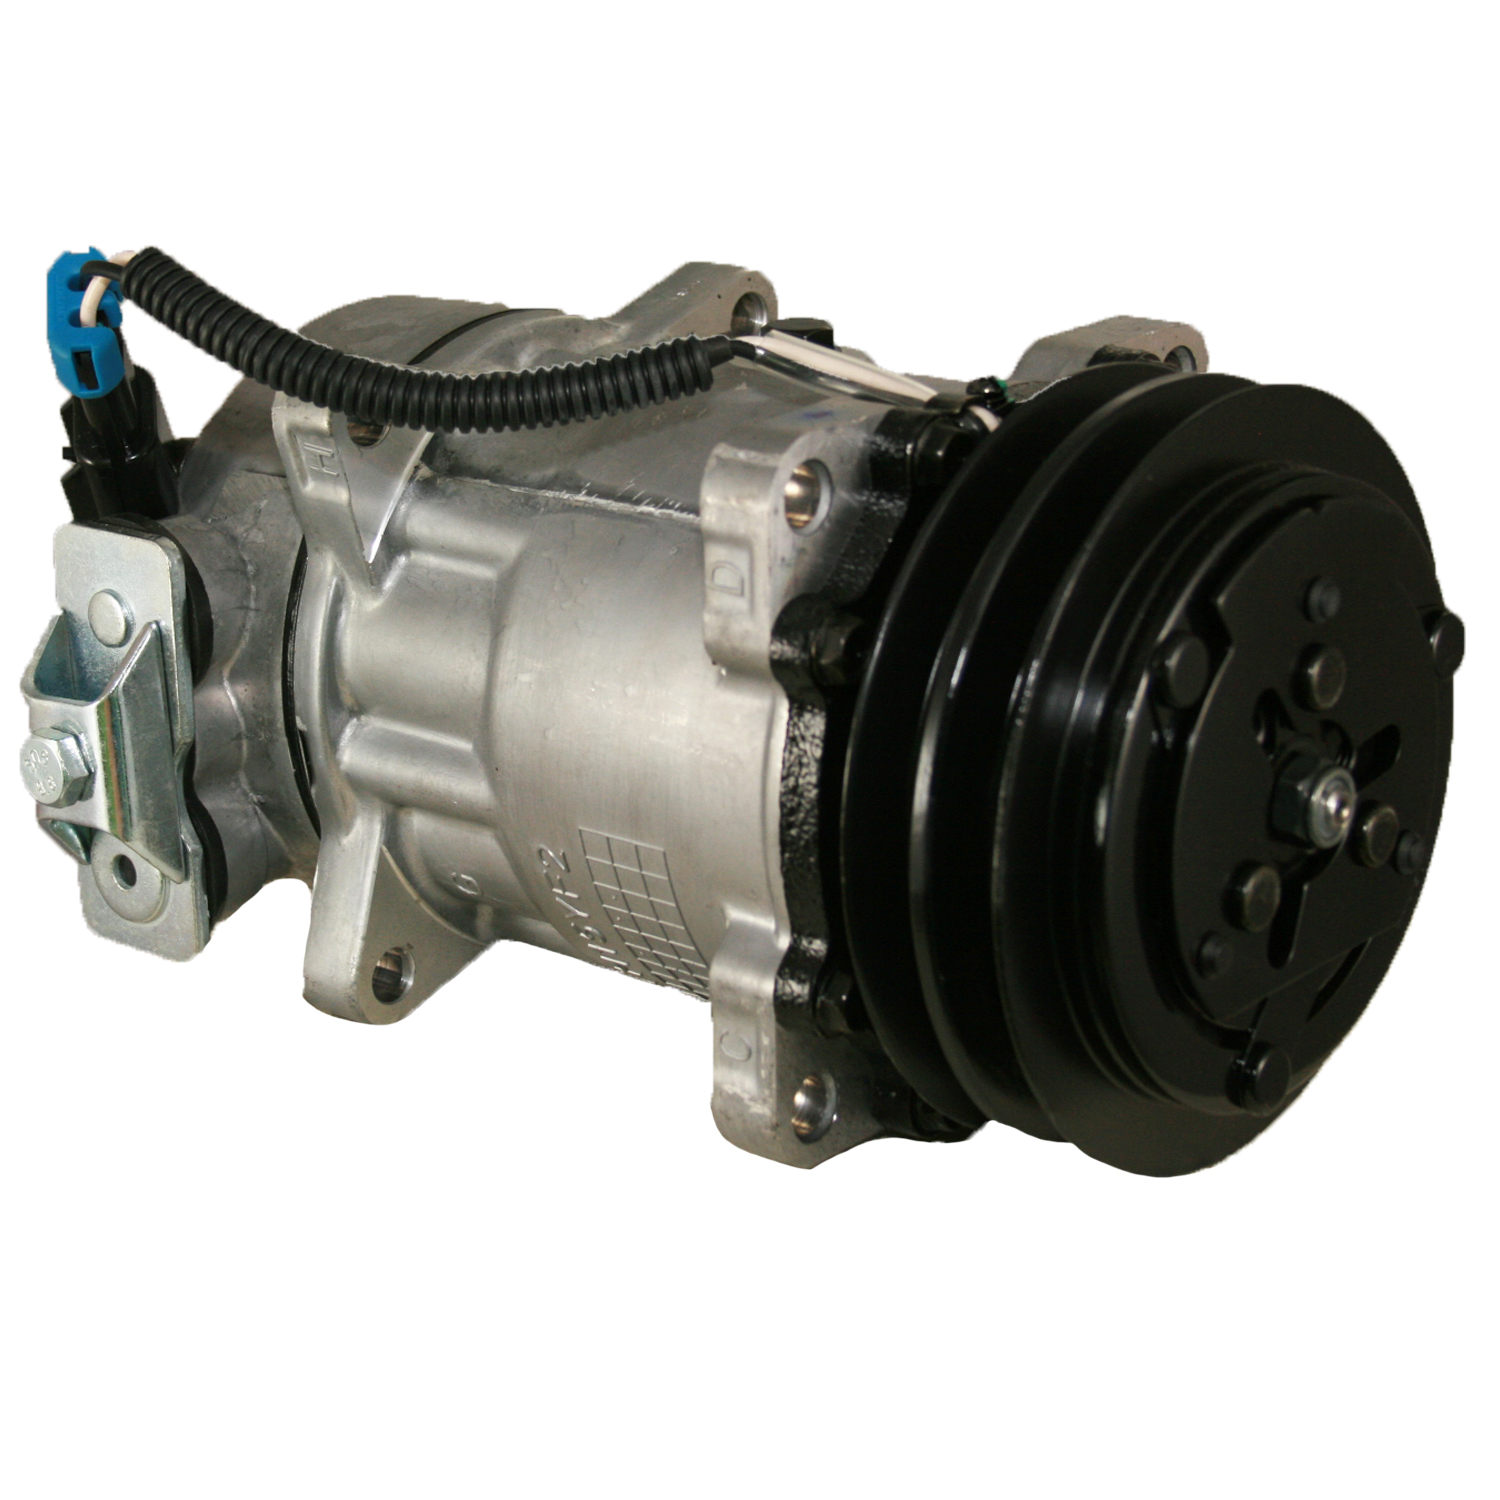 TCW Compressor 40583.202NEW New Product Image field_60b6a13a6e67c